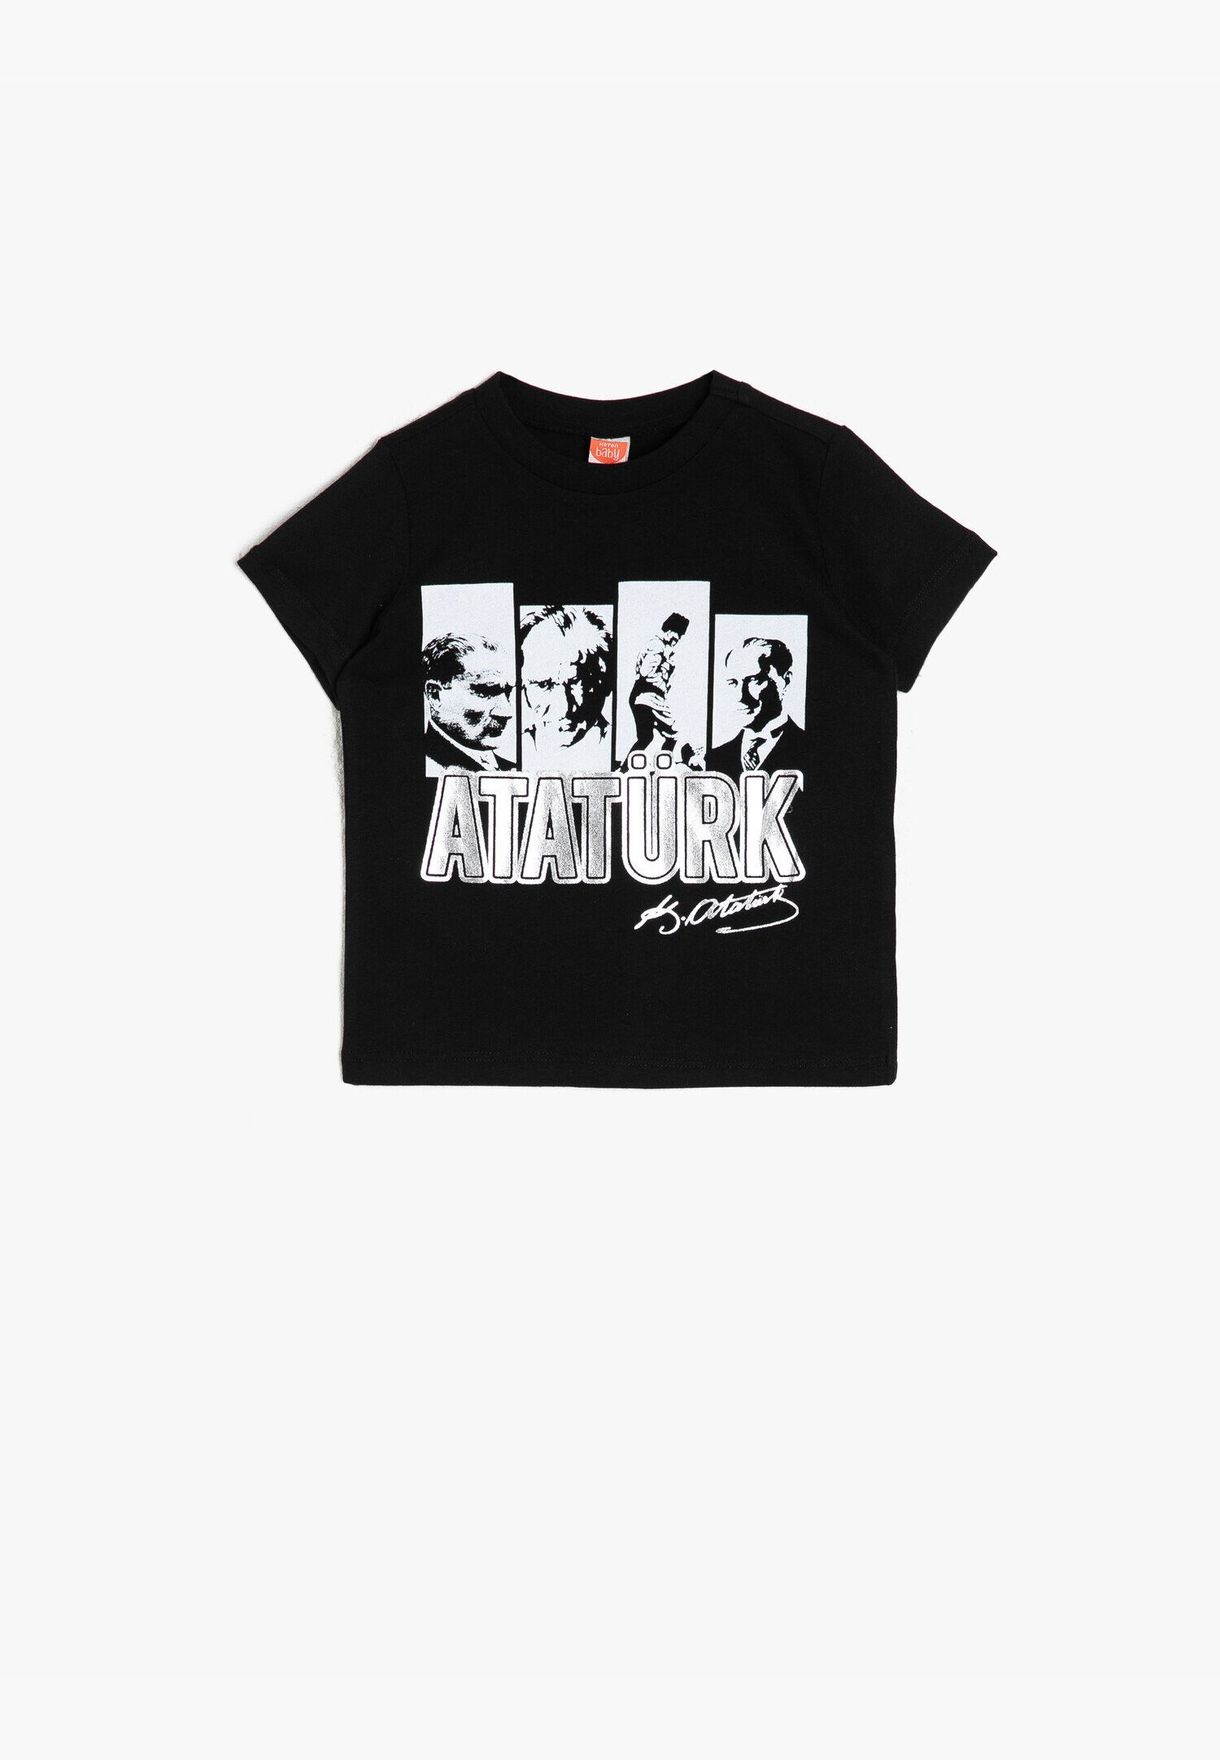 Atatürk Printed T-Shirt